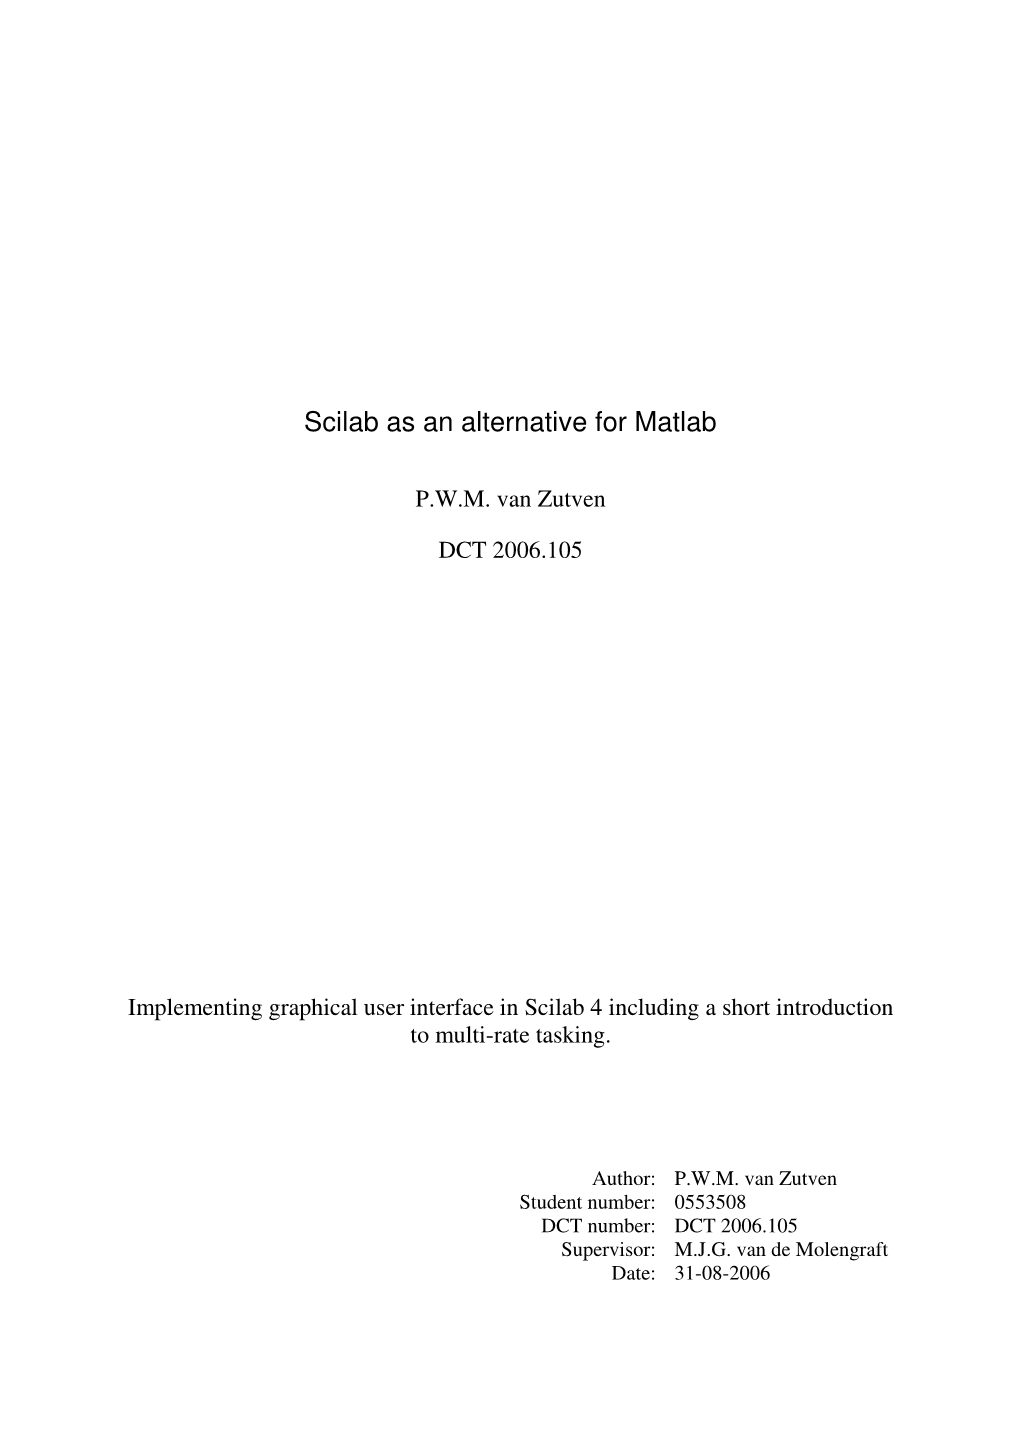 Scilab As an Alternative for Matlab